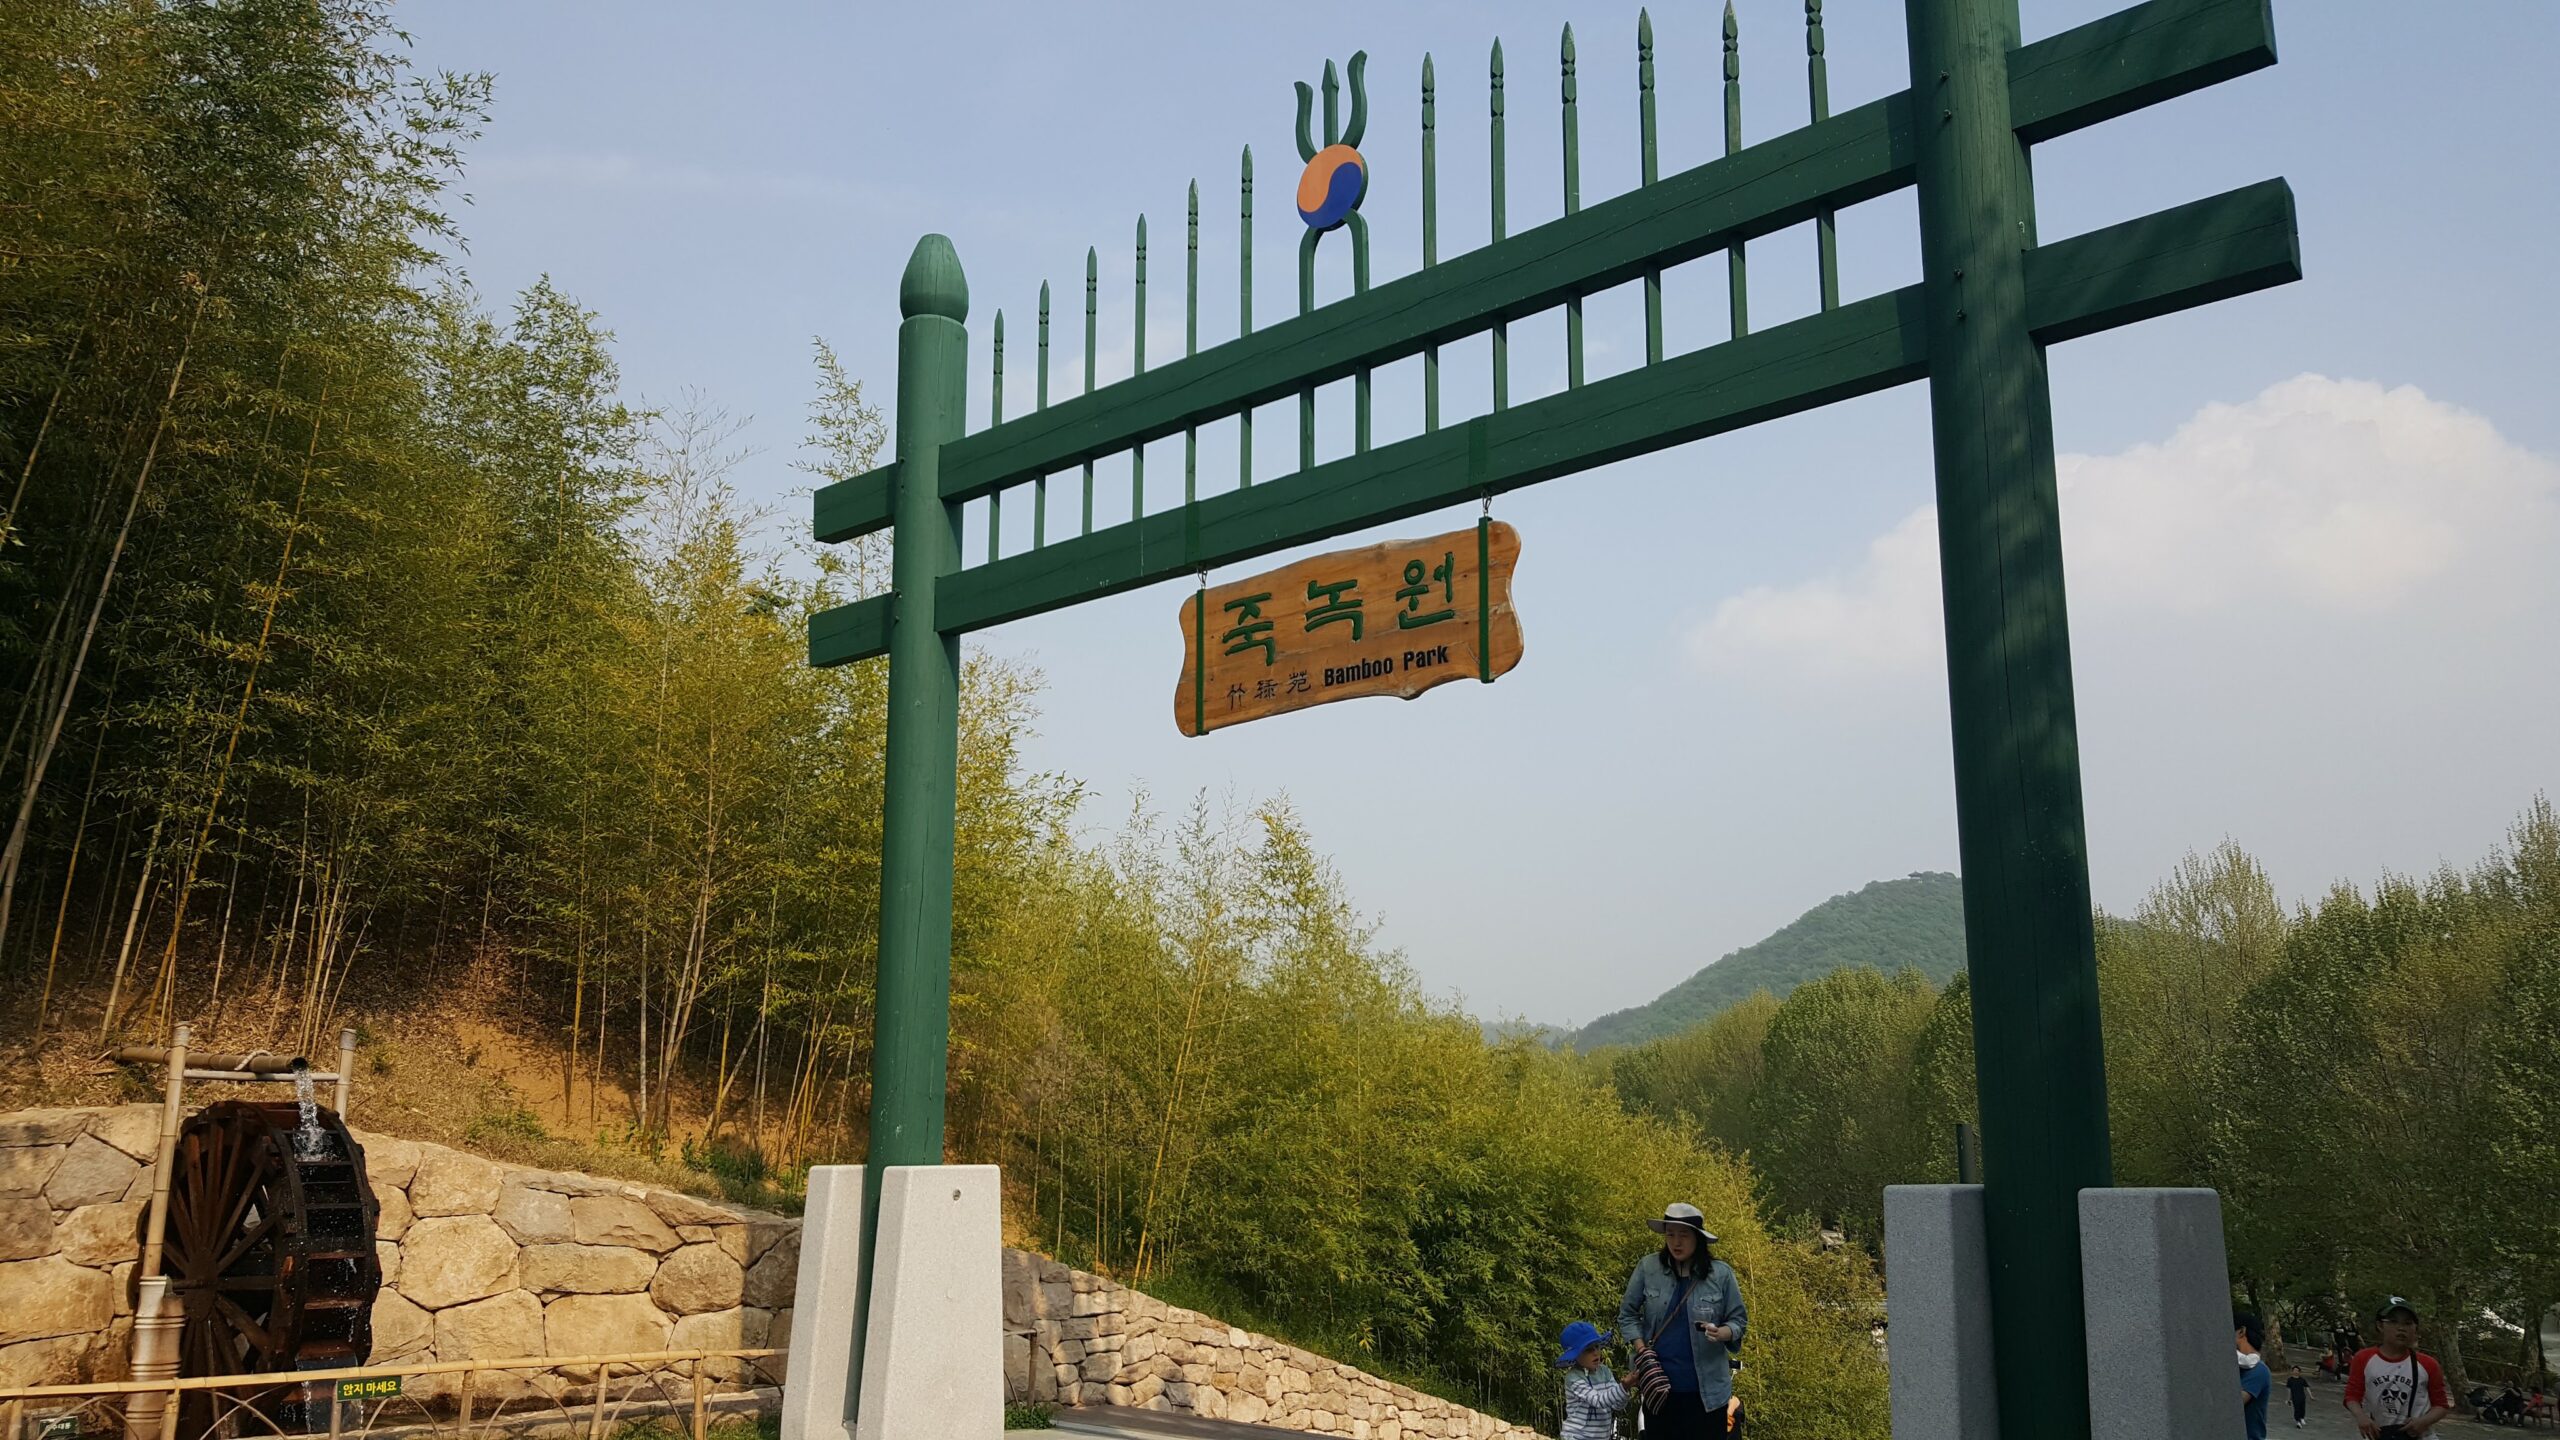 20170501_155440-scaled Serenity Found: The Juknokwon Bamboo Garden in Damyang Korea